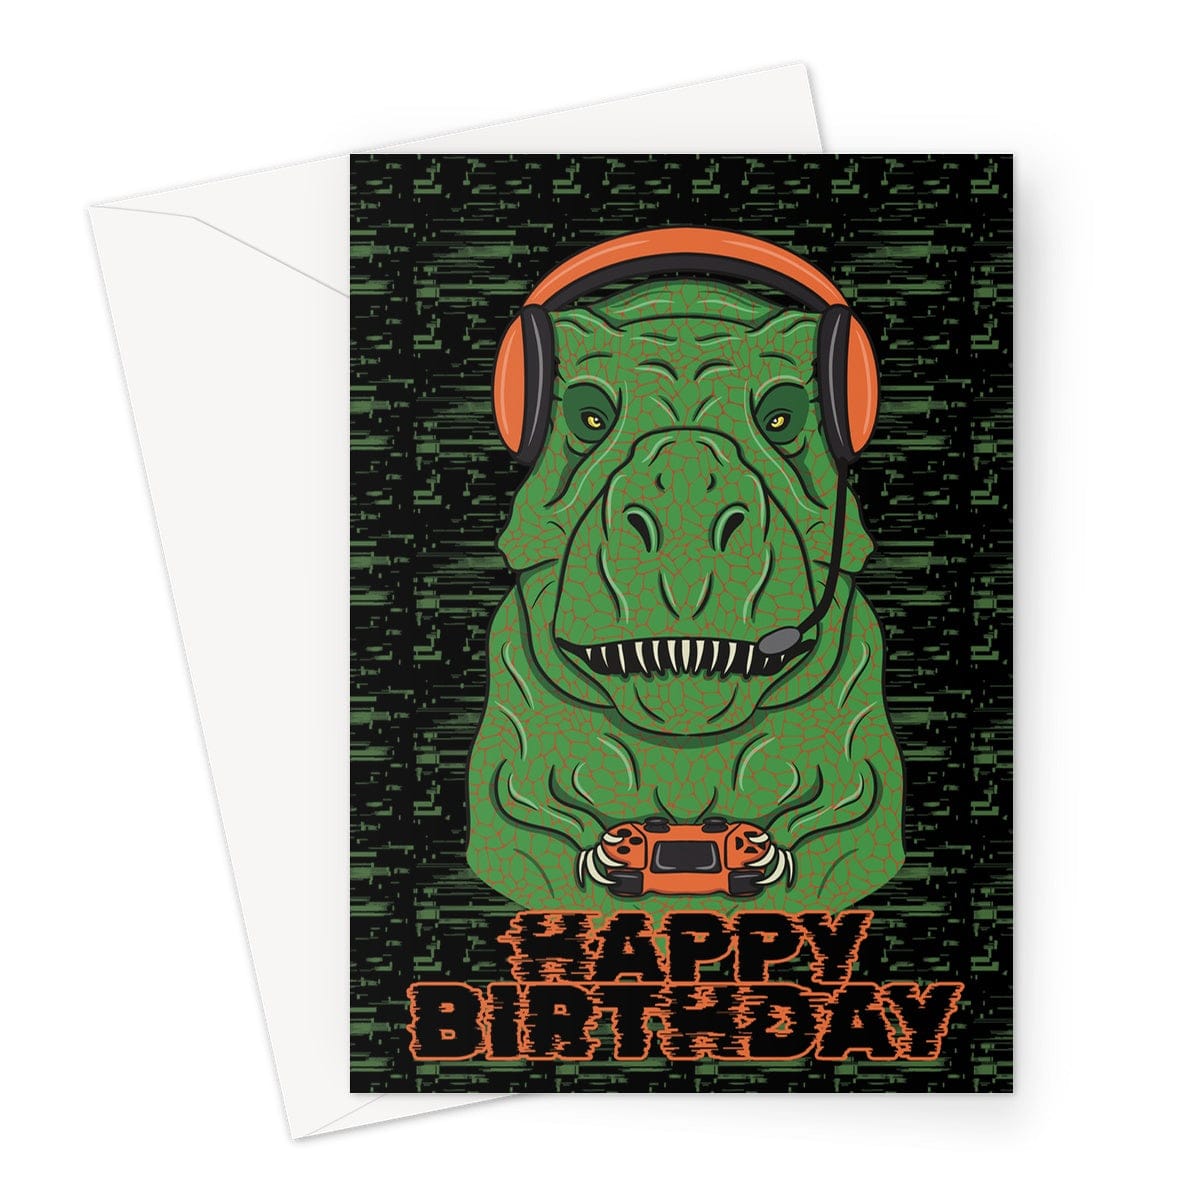 A funny dinosaur birthday card for a video gamer.